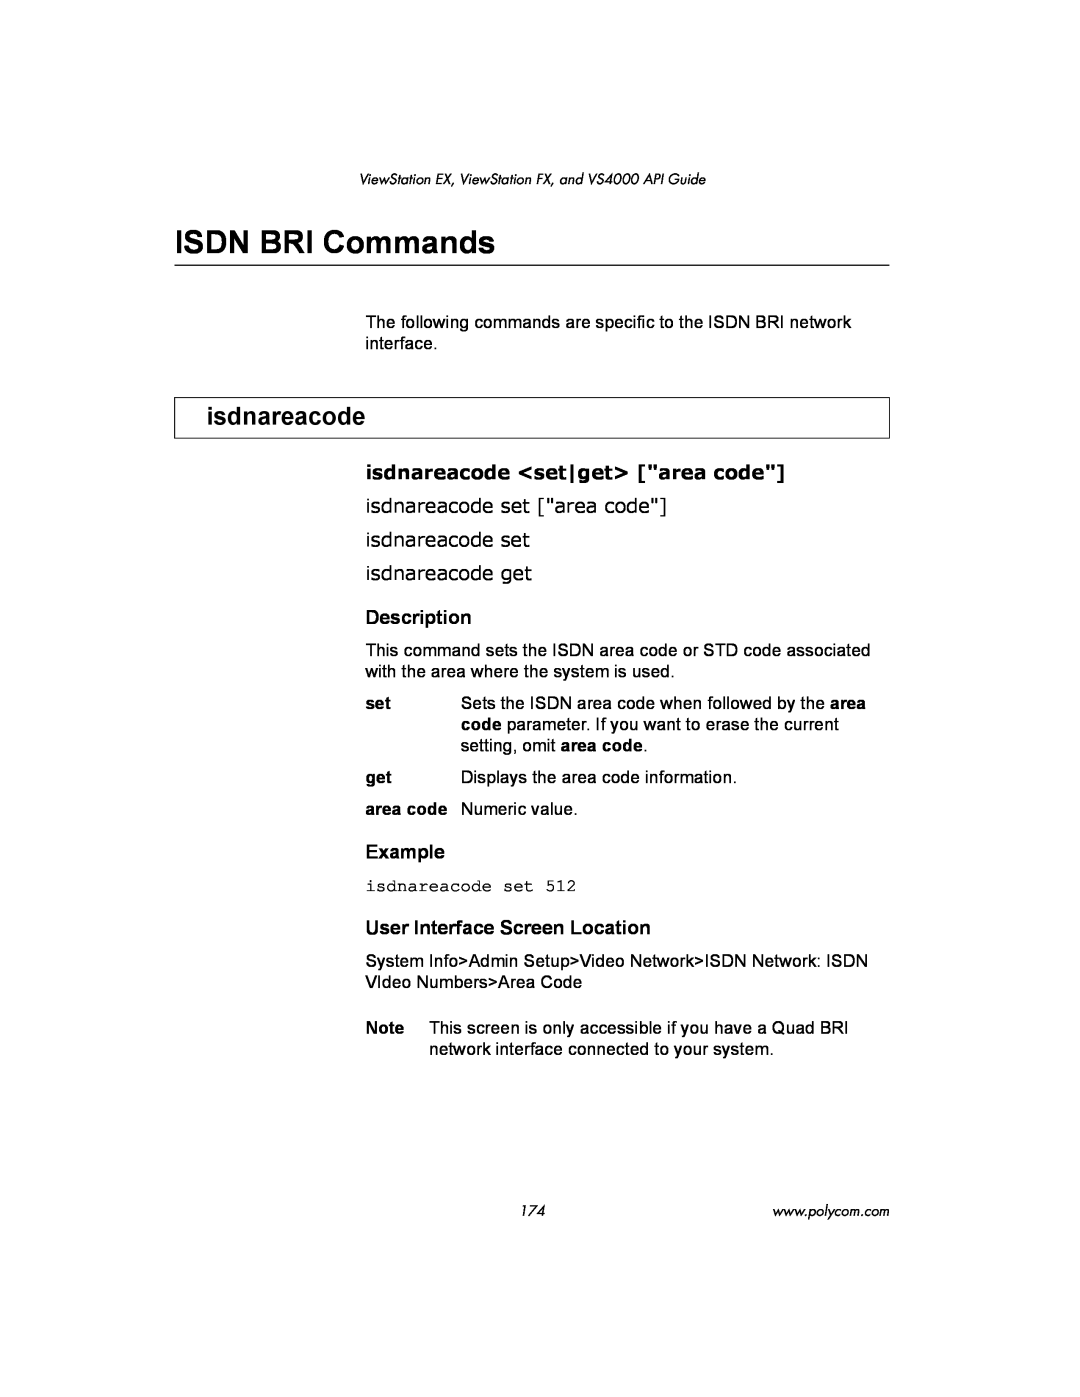 Polycom VIEWSTATION EX manual ISDN BRI Commands, isdnareacode <set|get> area code, Description, Example, Numeric value 